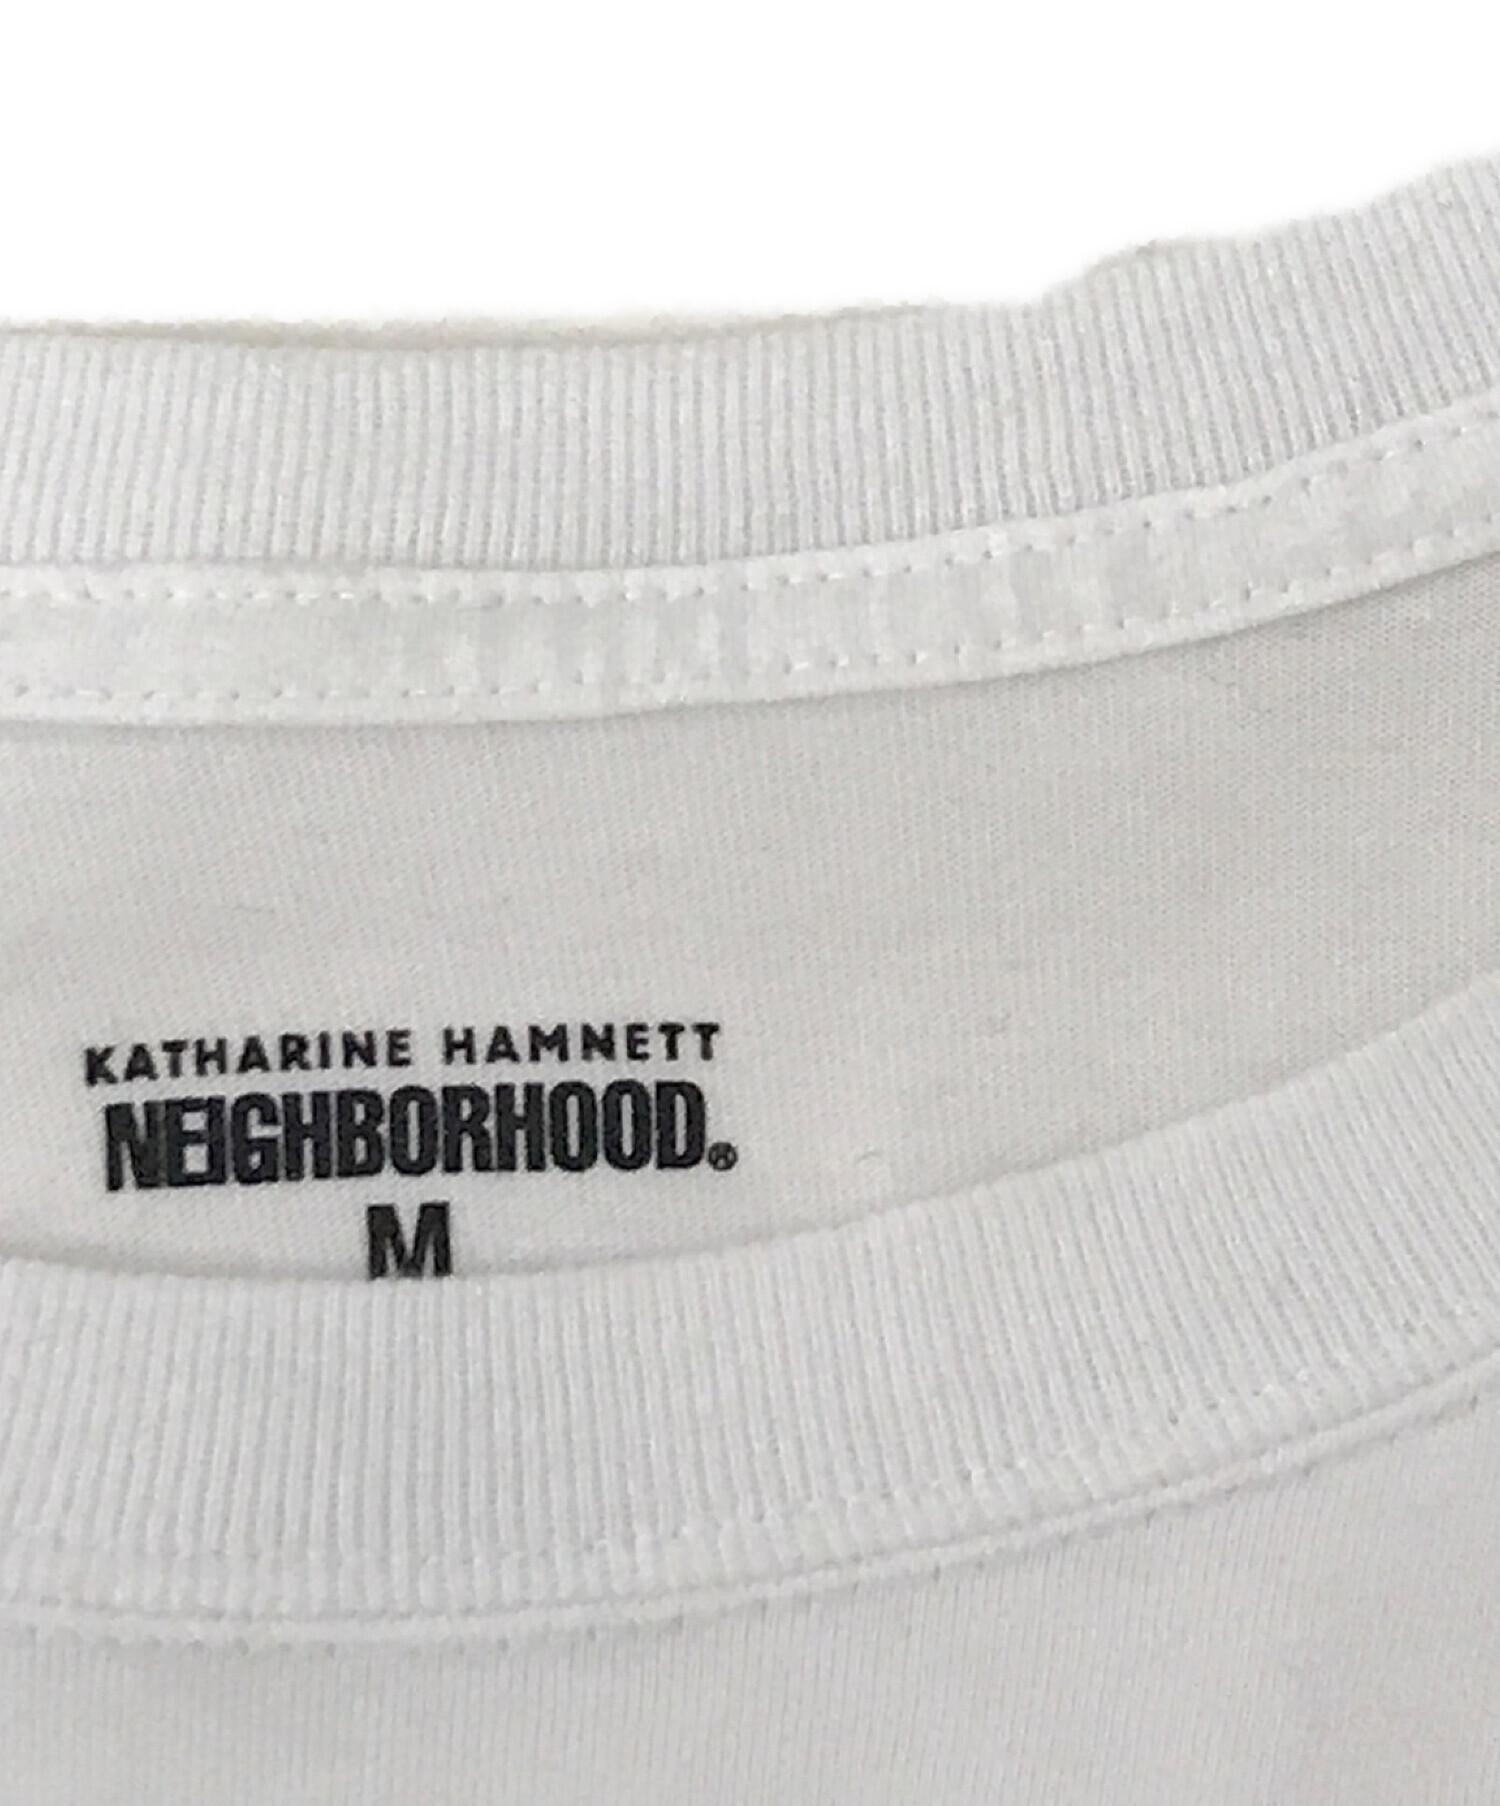 NEIGHBORHOOD (ネイバーフッド) KATHARINE HAMNETT (キャサリンハムネット) Tシャツ ホワイト サイズ:M